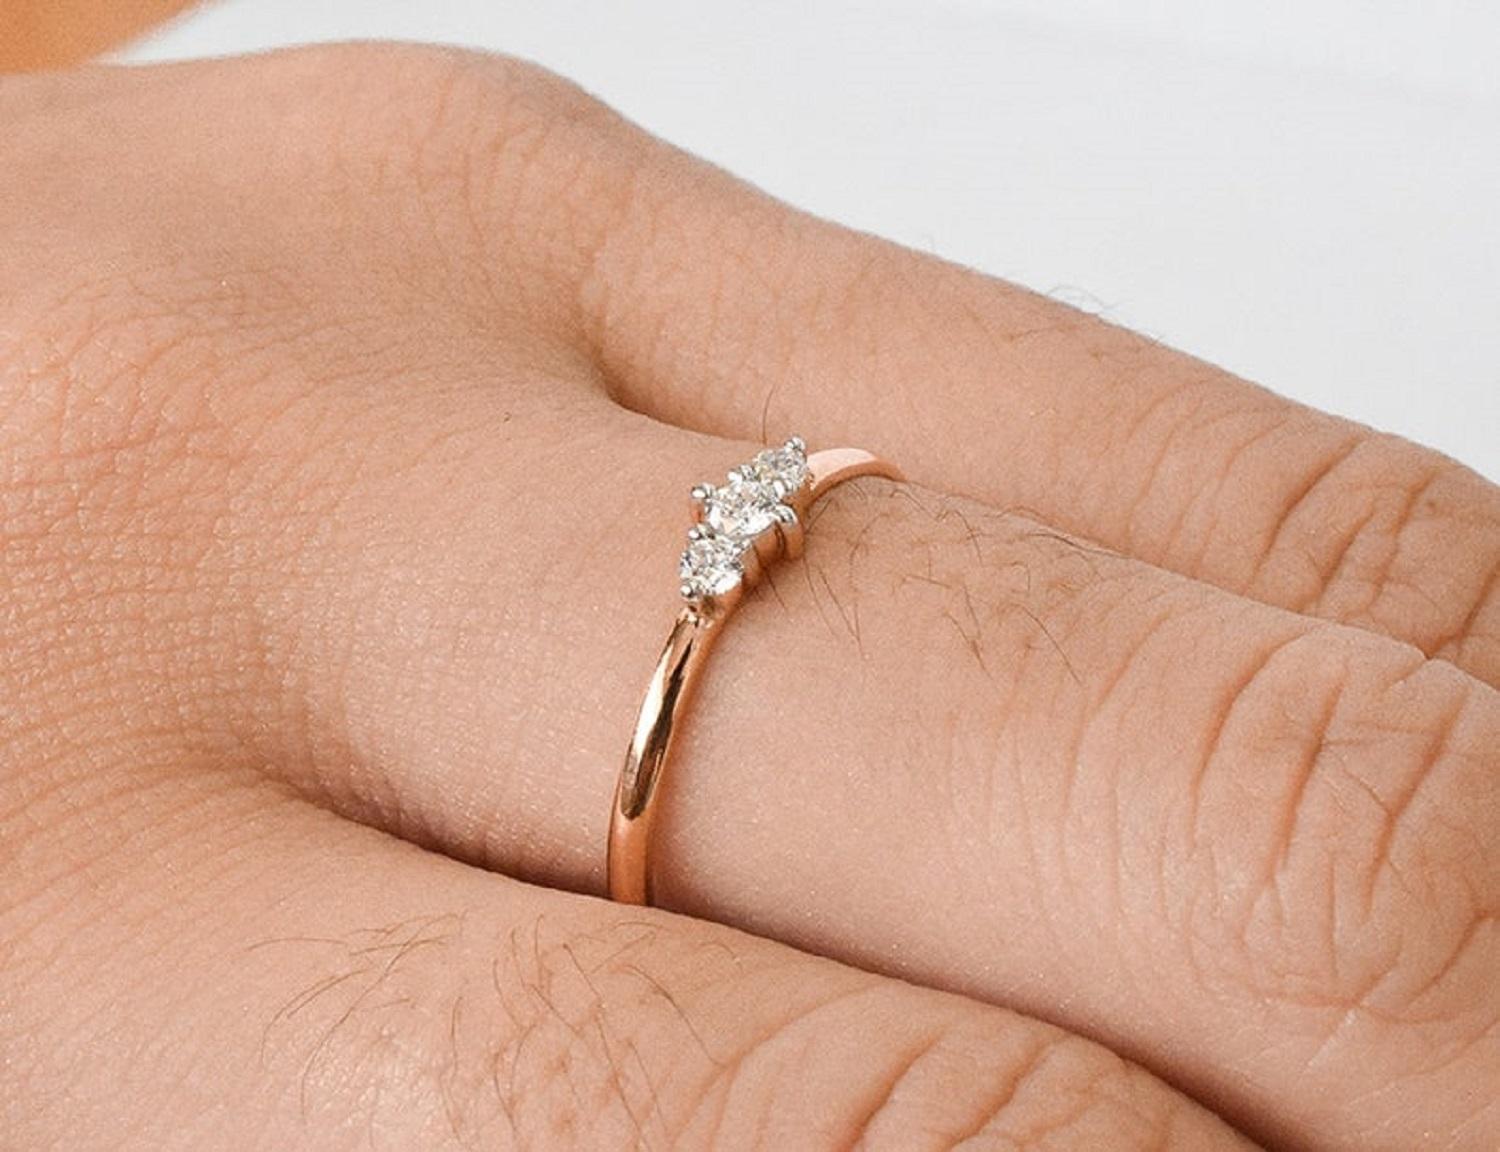 For Sale:  18k Gold Three Stone Diamond Engagement Ring Trio Diamond Ring 8